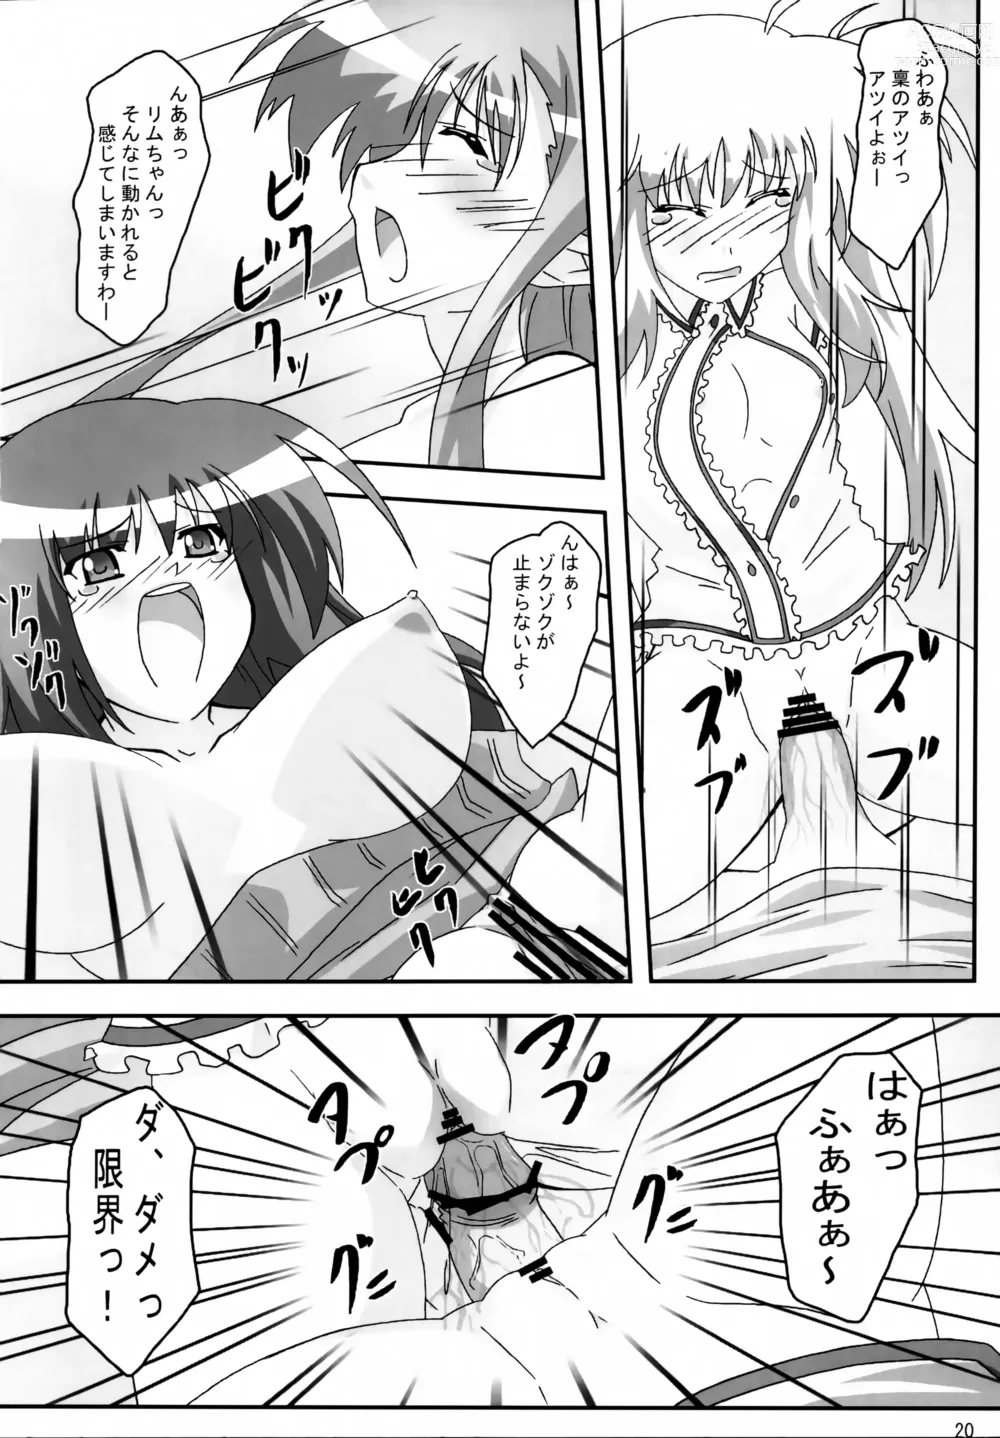 Page 19 of doujinshi SHUFFLE! With